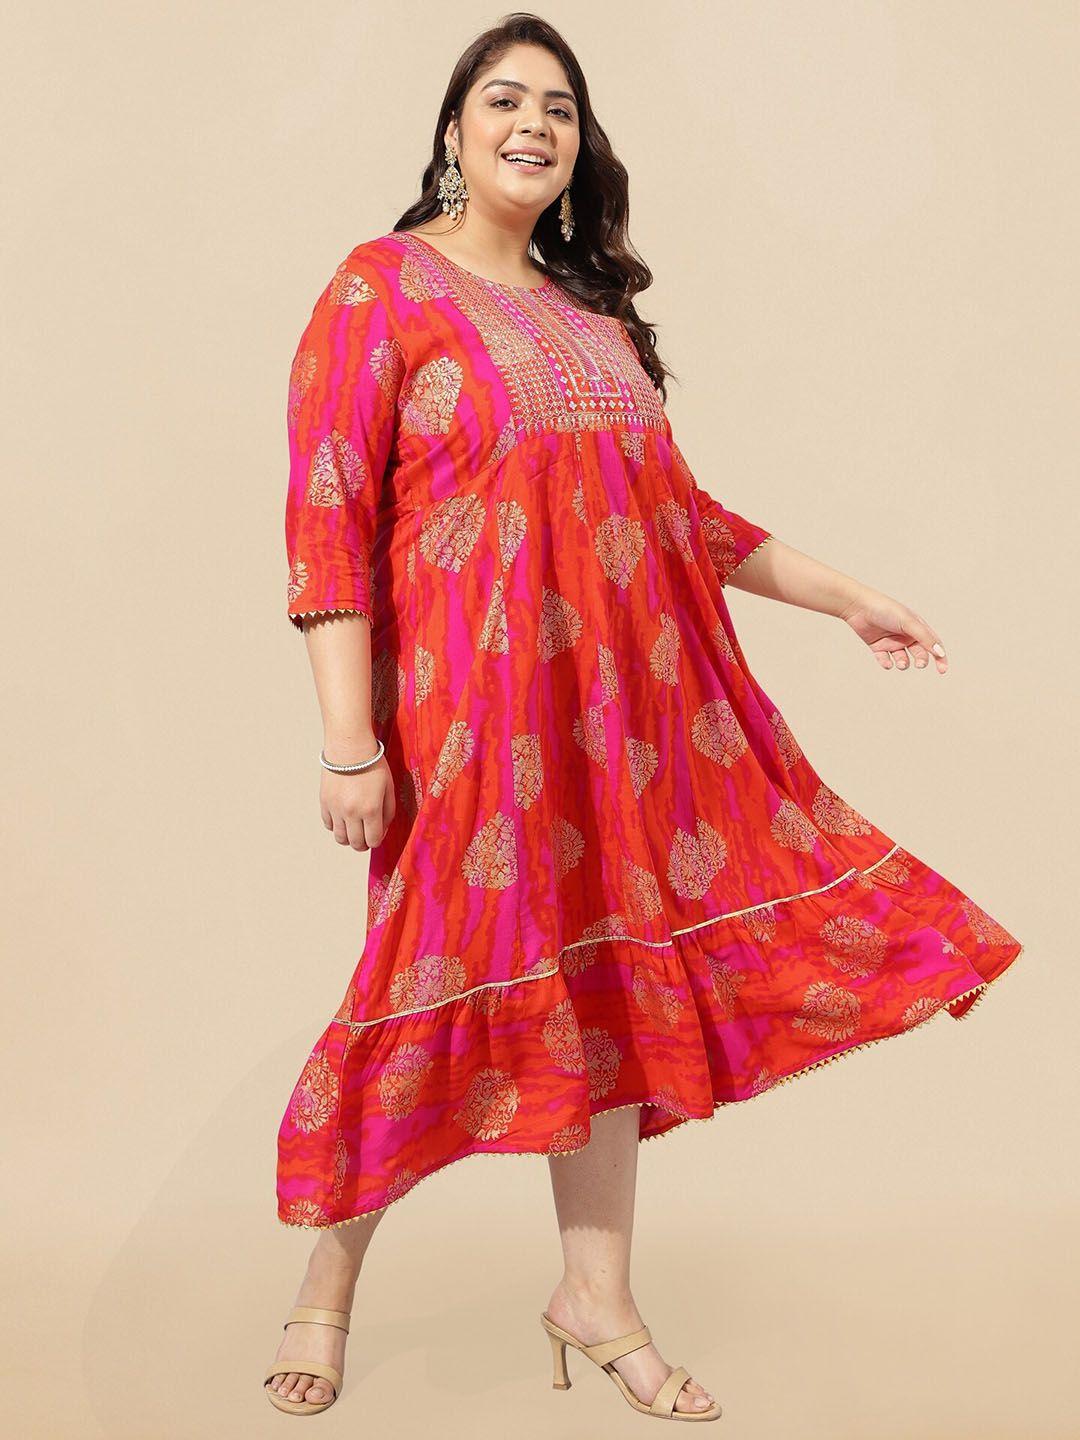 mirchi fashion plus size pink ethnic motifs printed embellished empire ethnic dress